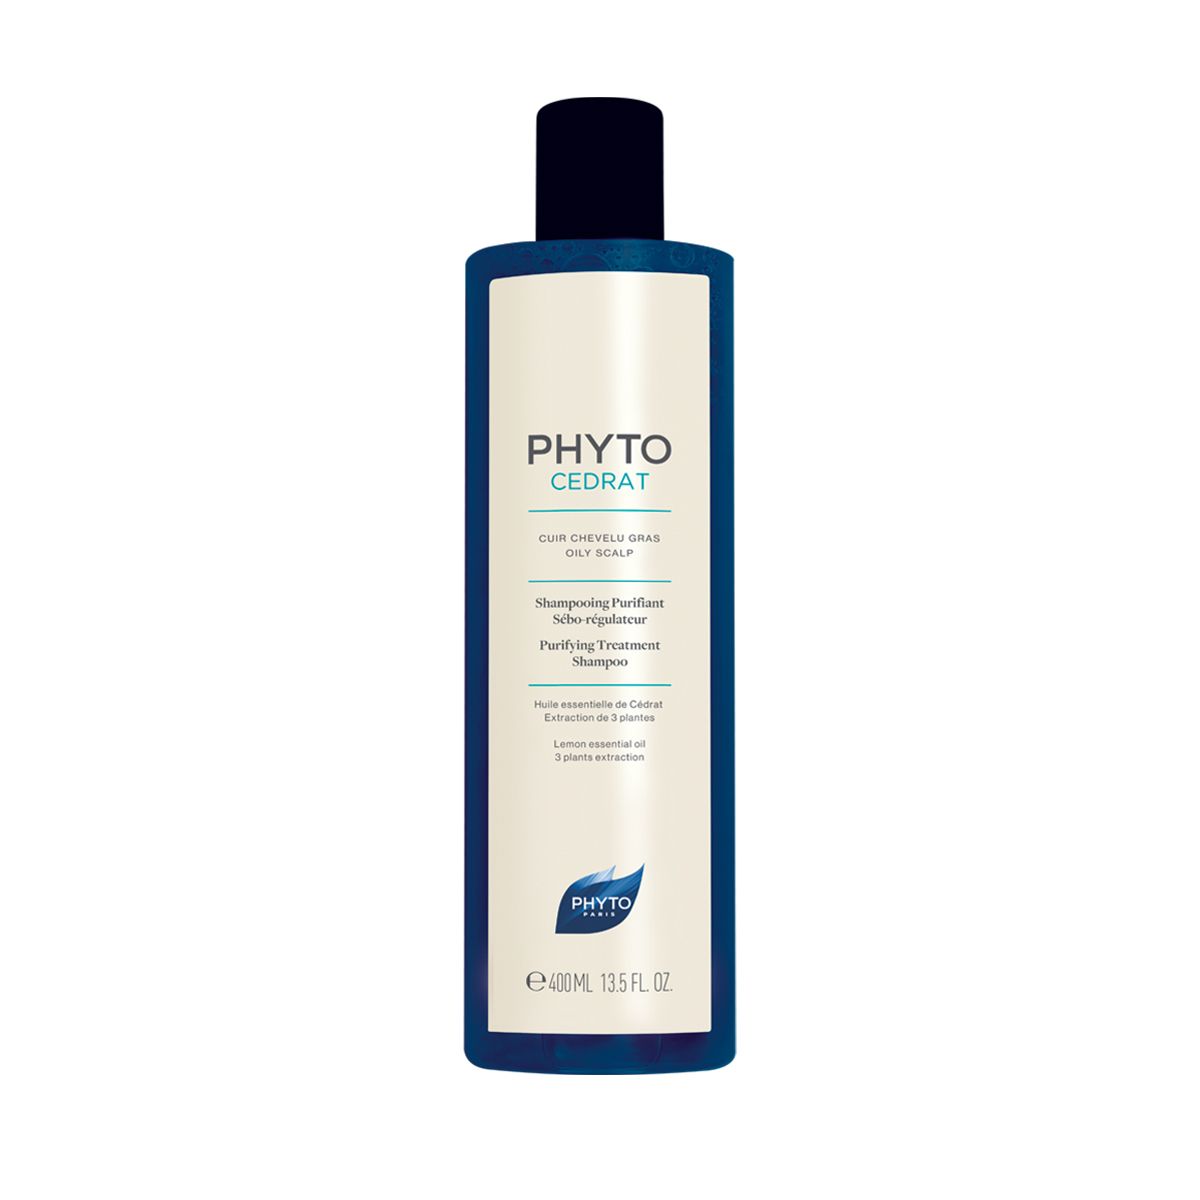 PHYTOCEDRAT Purifying Treatment Shampoo 400ml